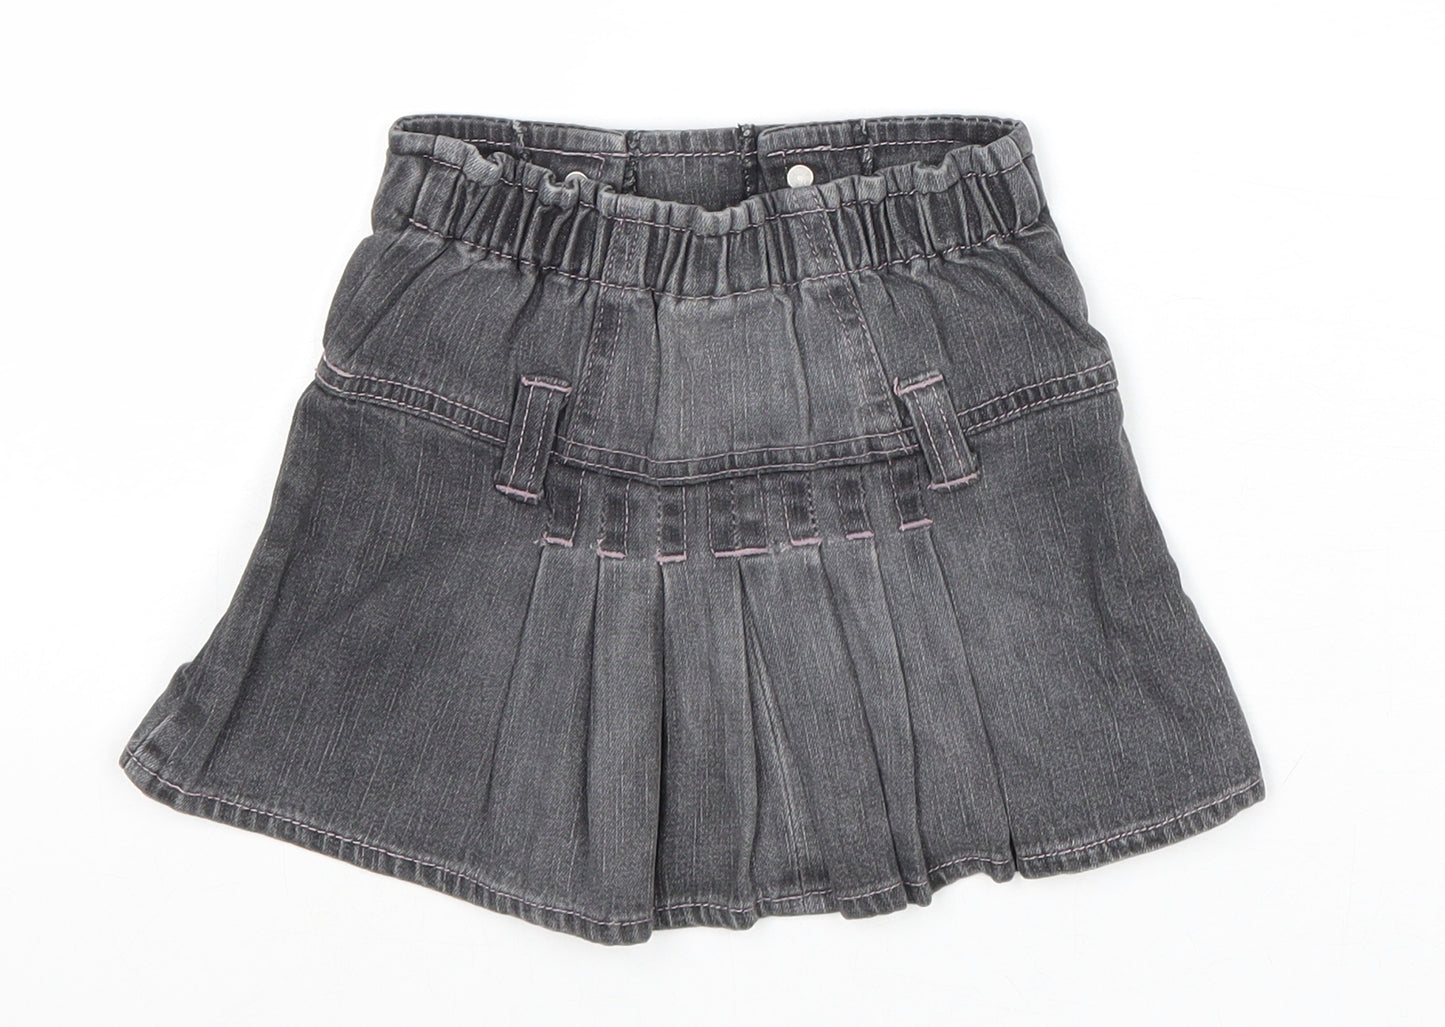 Girl 2 Girl Girls Grey Cotton Pleated Skirt Size 2-3 Years Regular Button